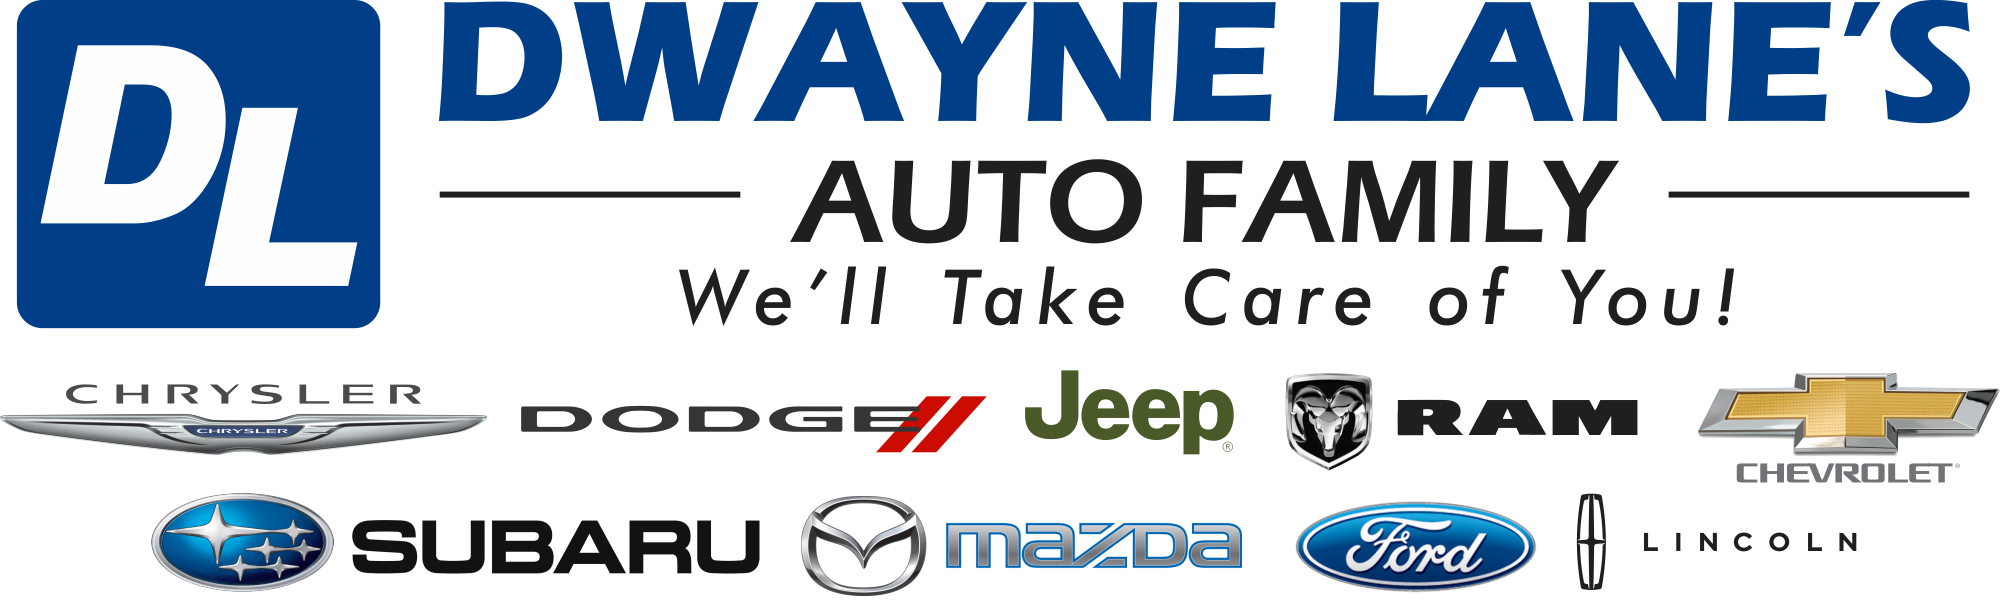 Dwayne Lane's Auto Family's Logo